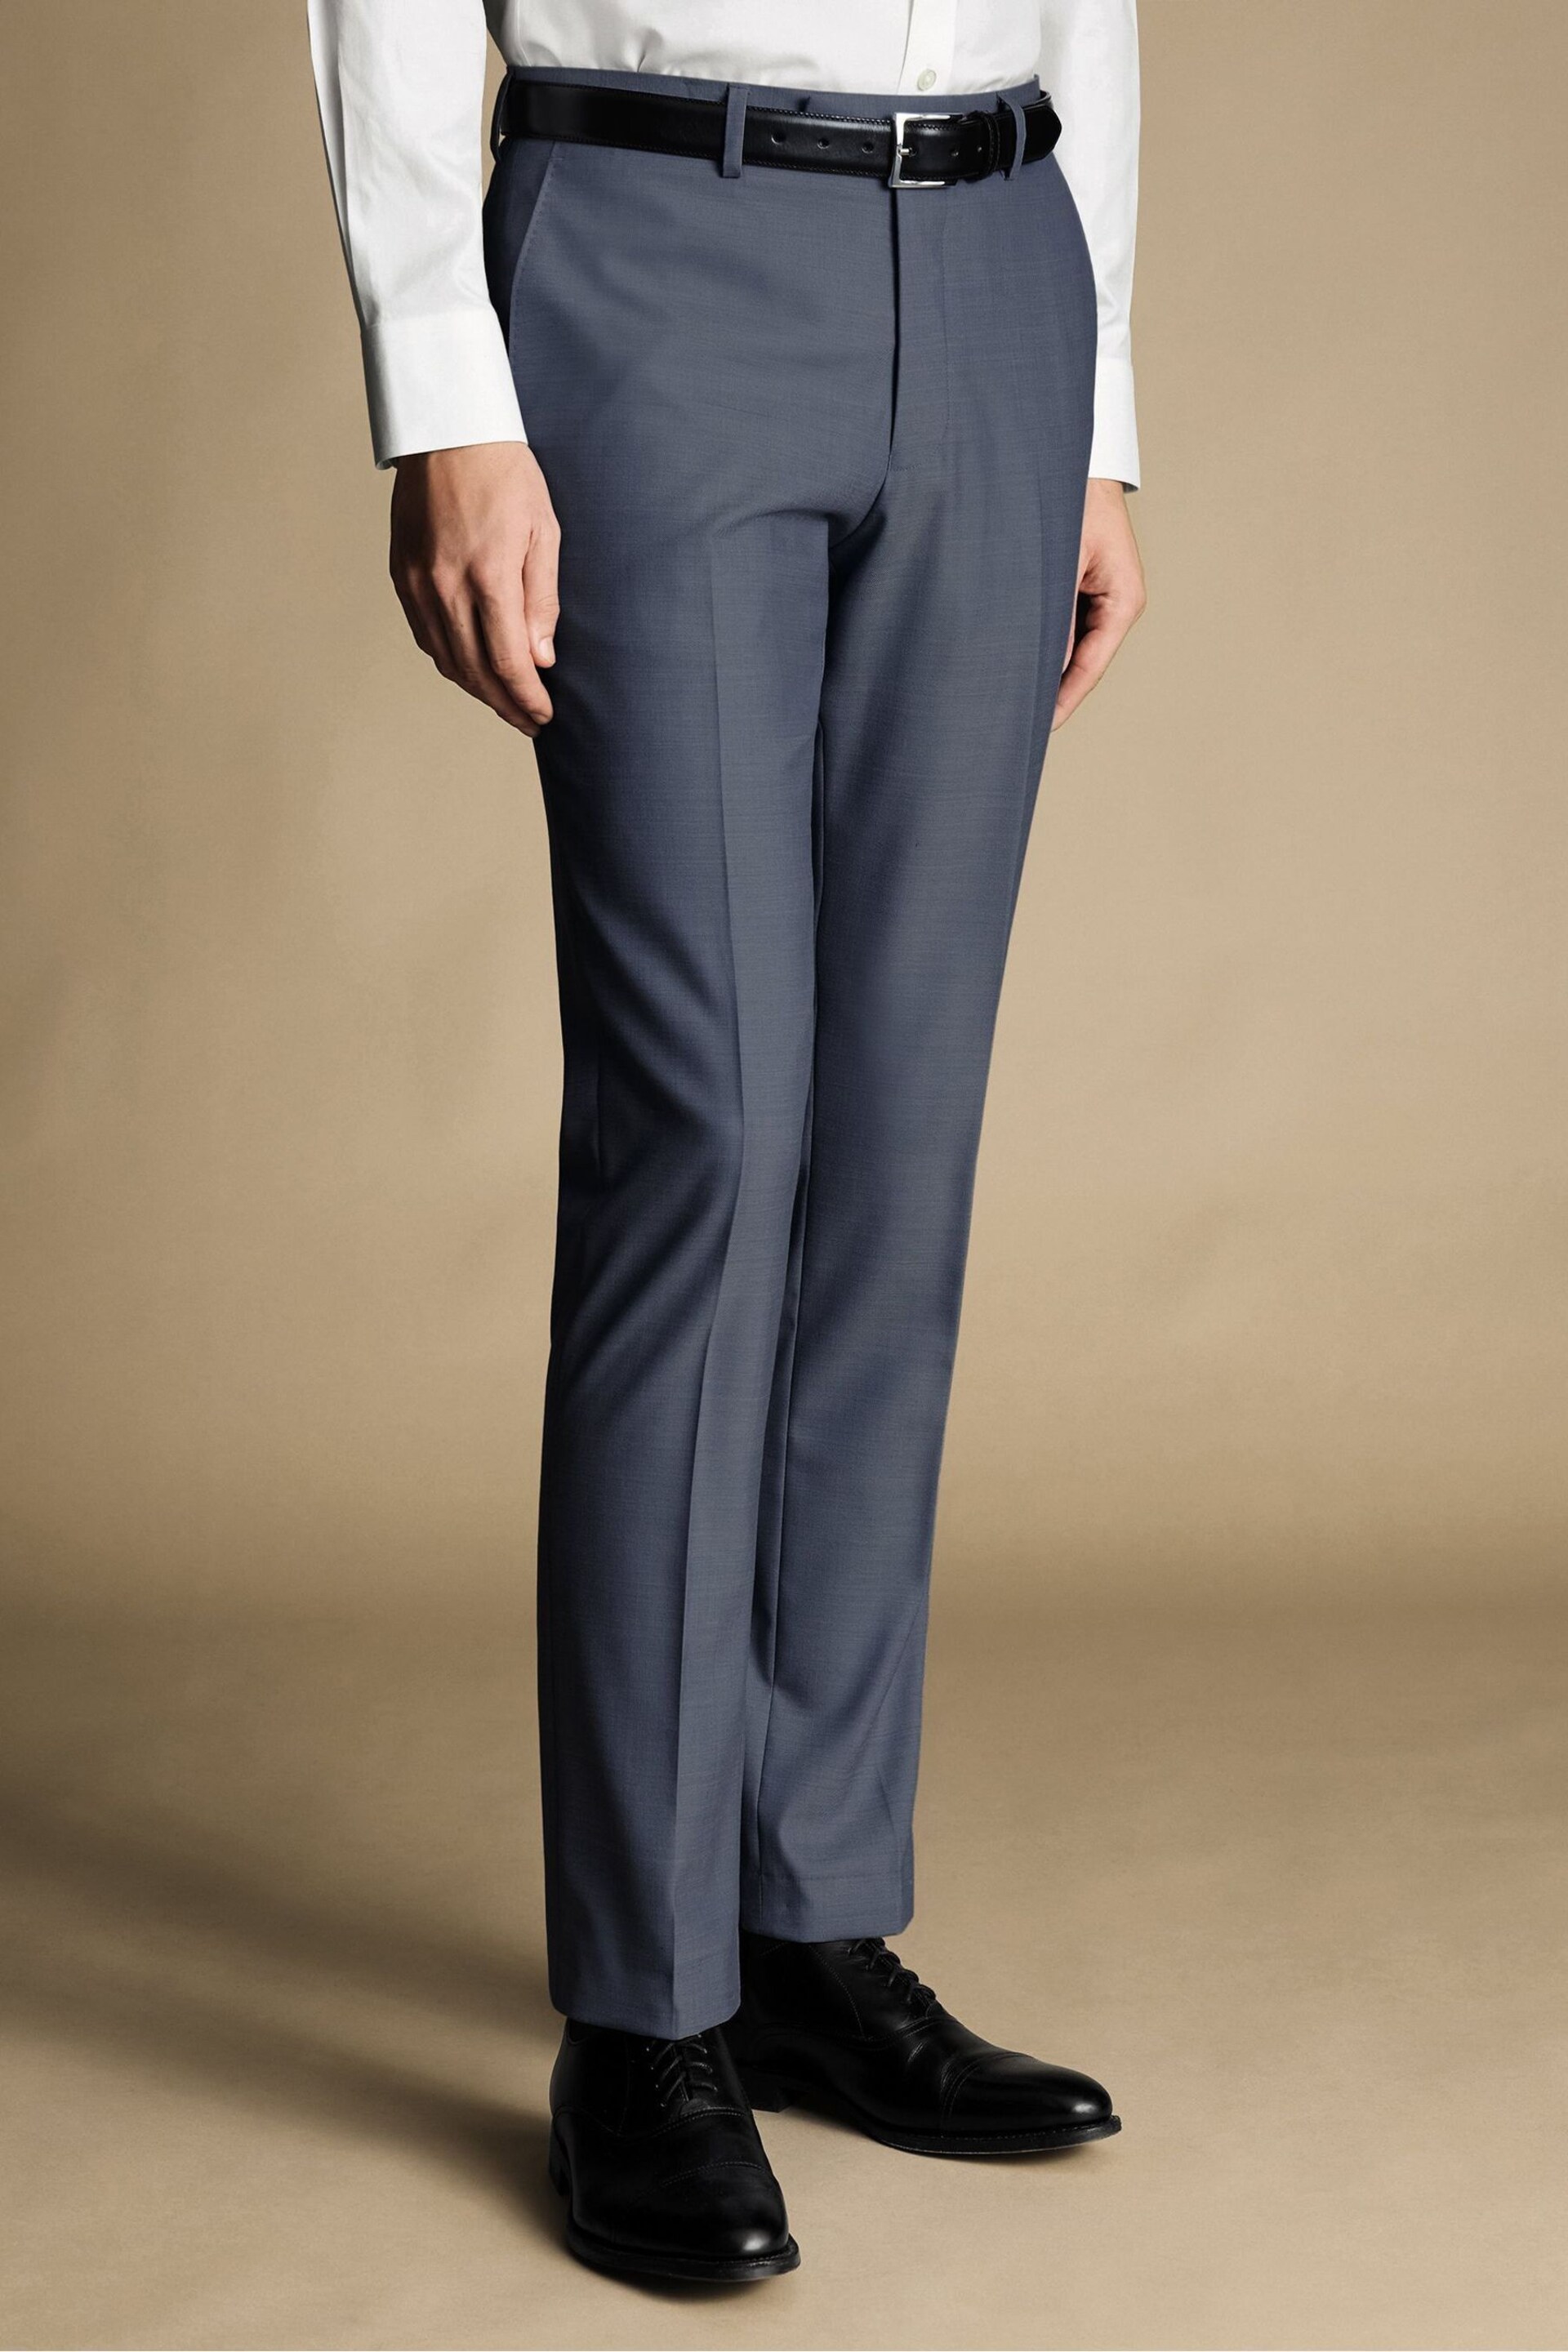 Charles Tyrwhitt Blue Slim Fit Sharkskin Ultimate Performance Suit Trousers - Image 2 of 4